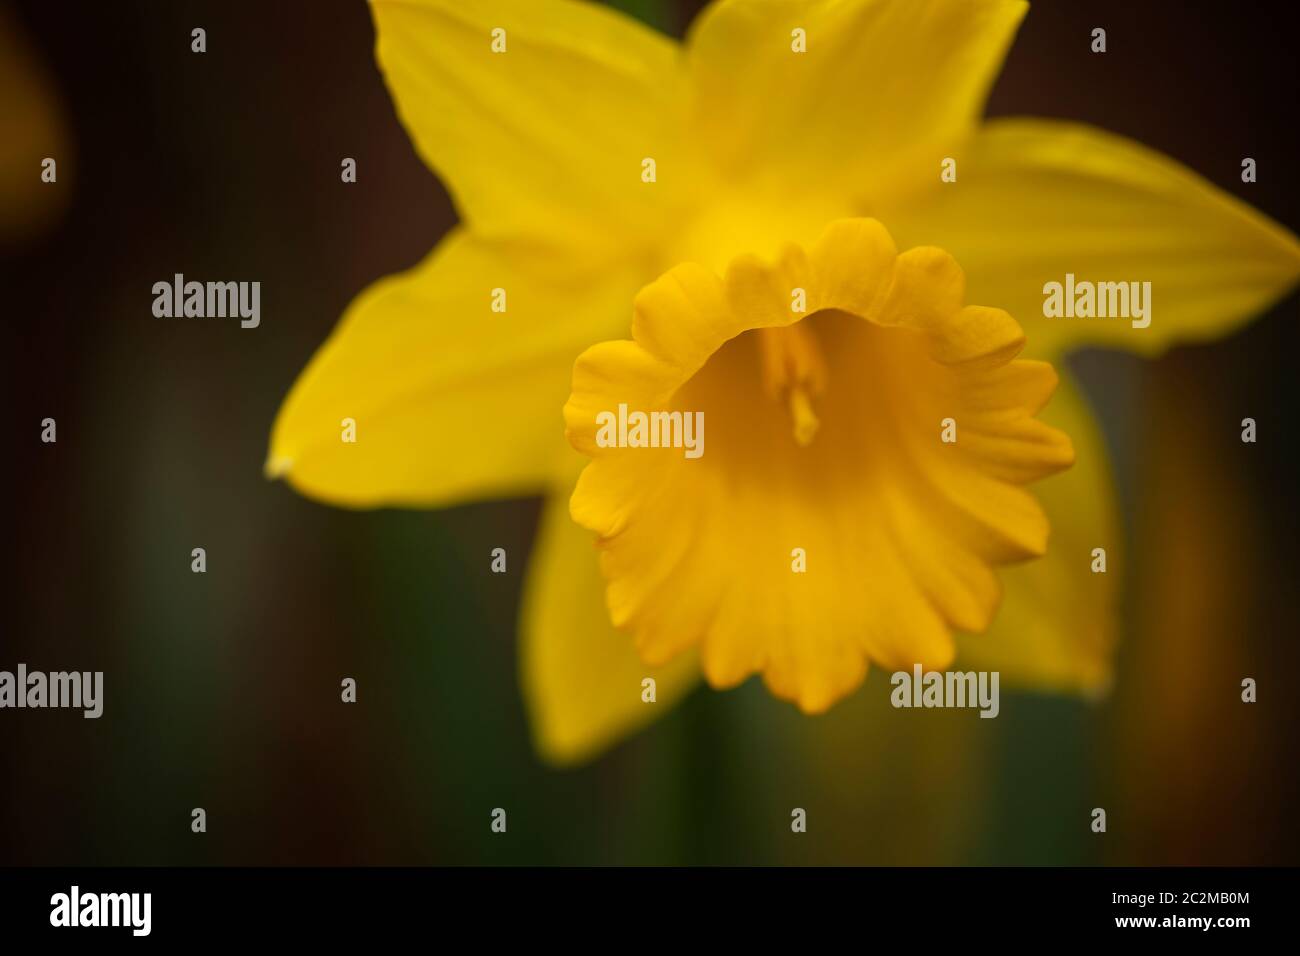 WA16867-00...WASHINGTON - Daffodil blüht Anfang März im Washington Park Arboretum in Seattle. Stockfoto